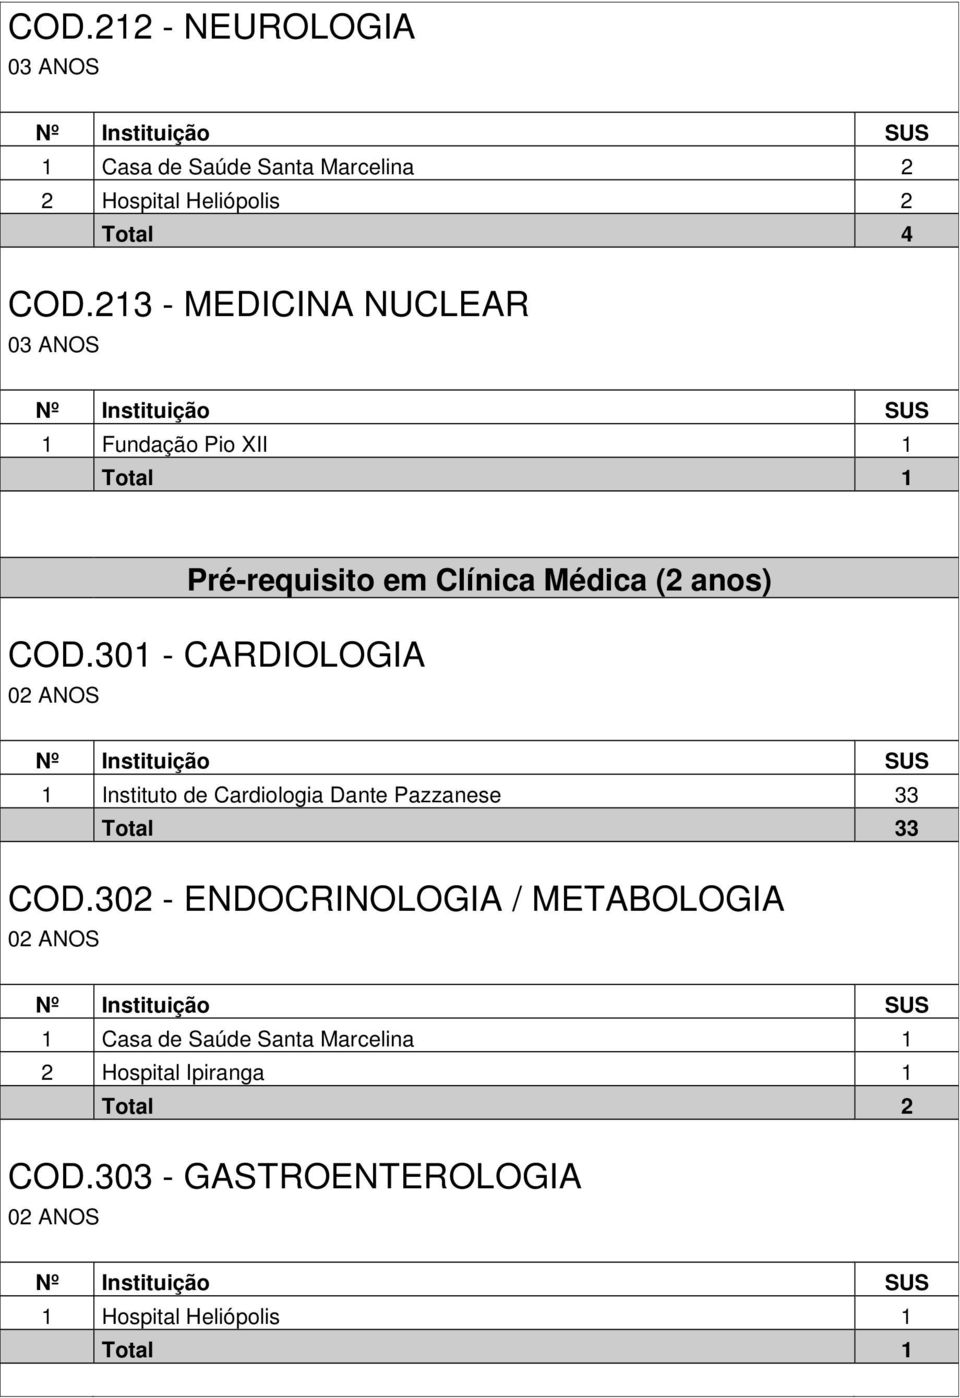 301 - CARDIOLOGIA 1 Instituto de Cardiologia Dante Pazzanese 33 Total 33 COD.